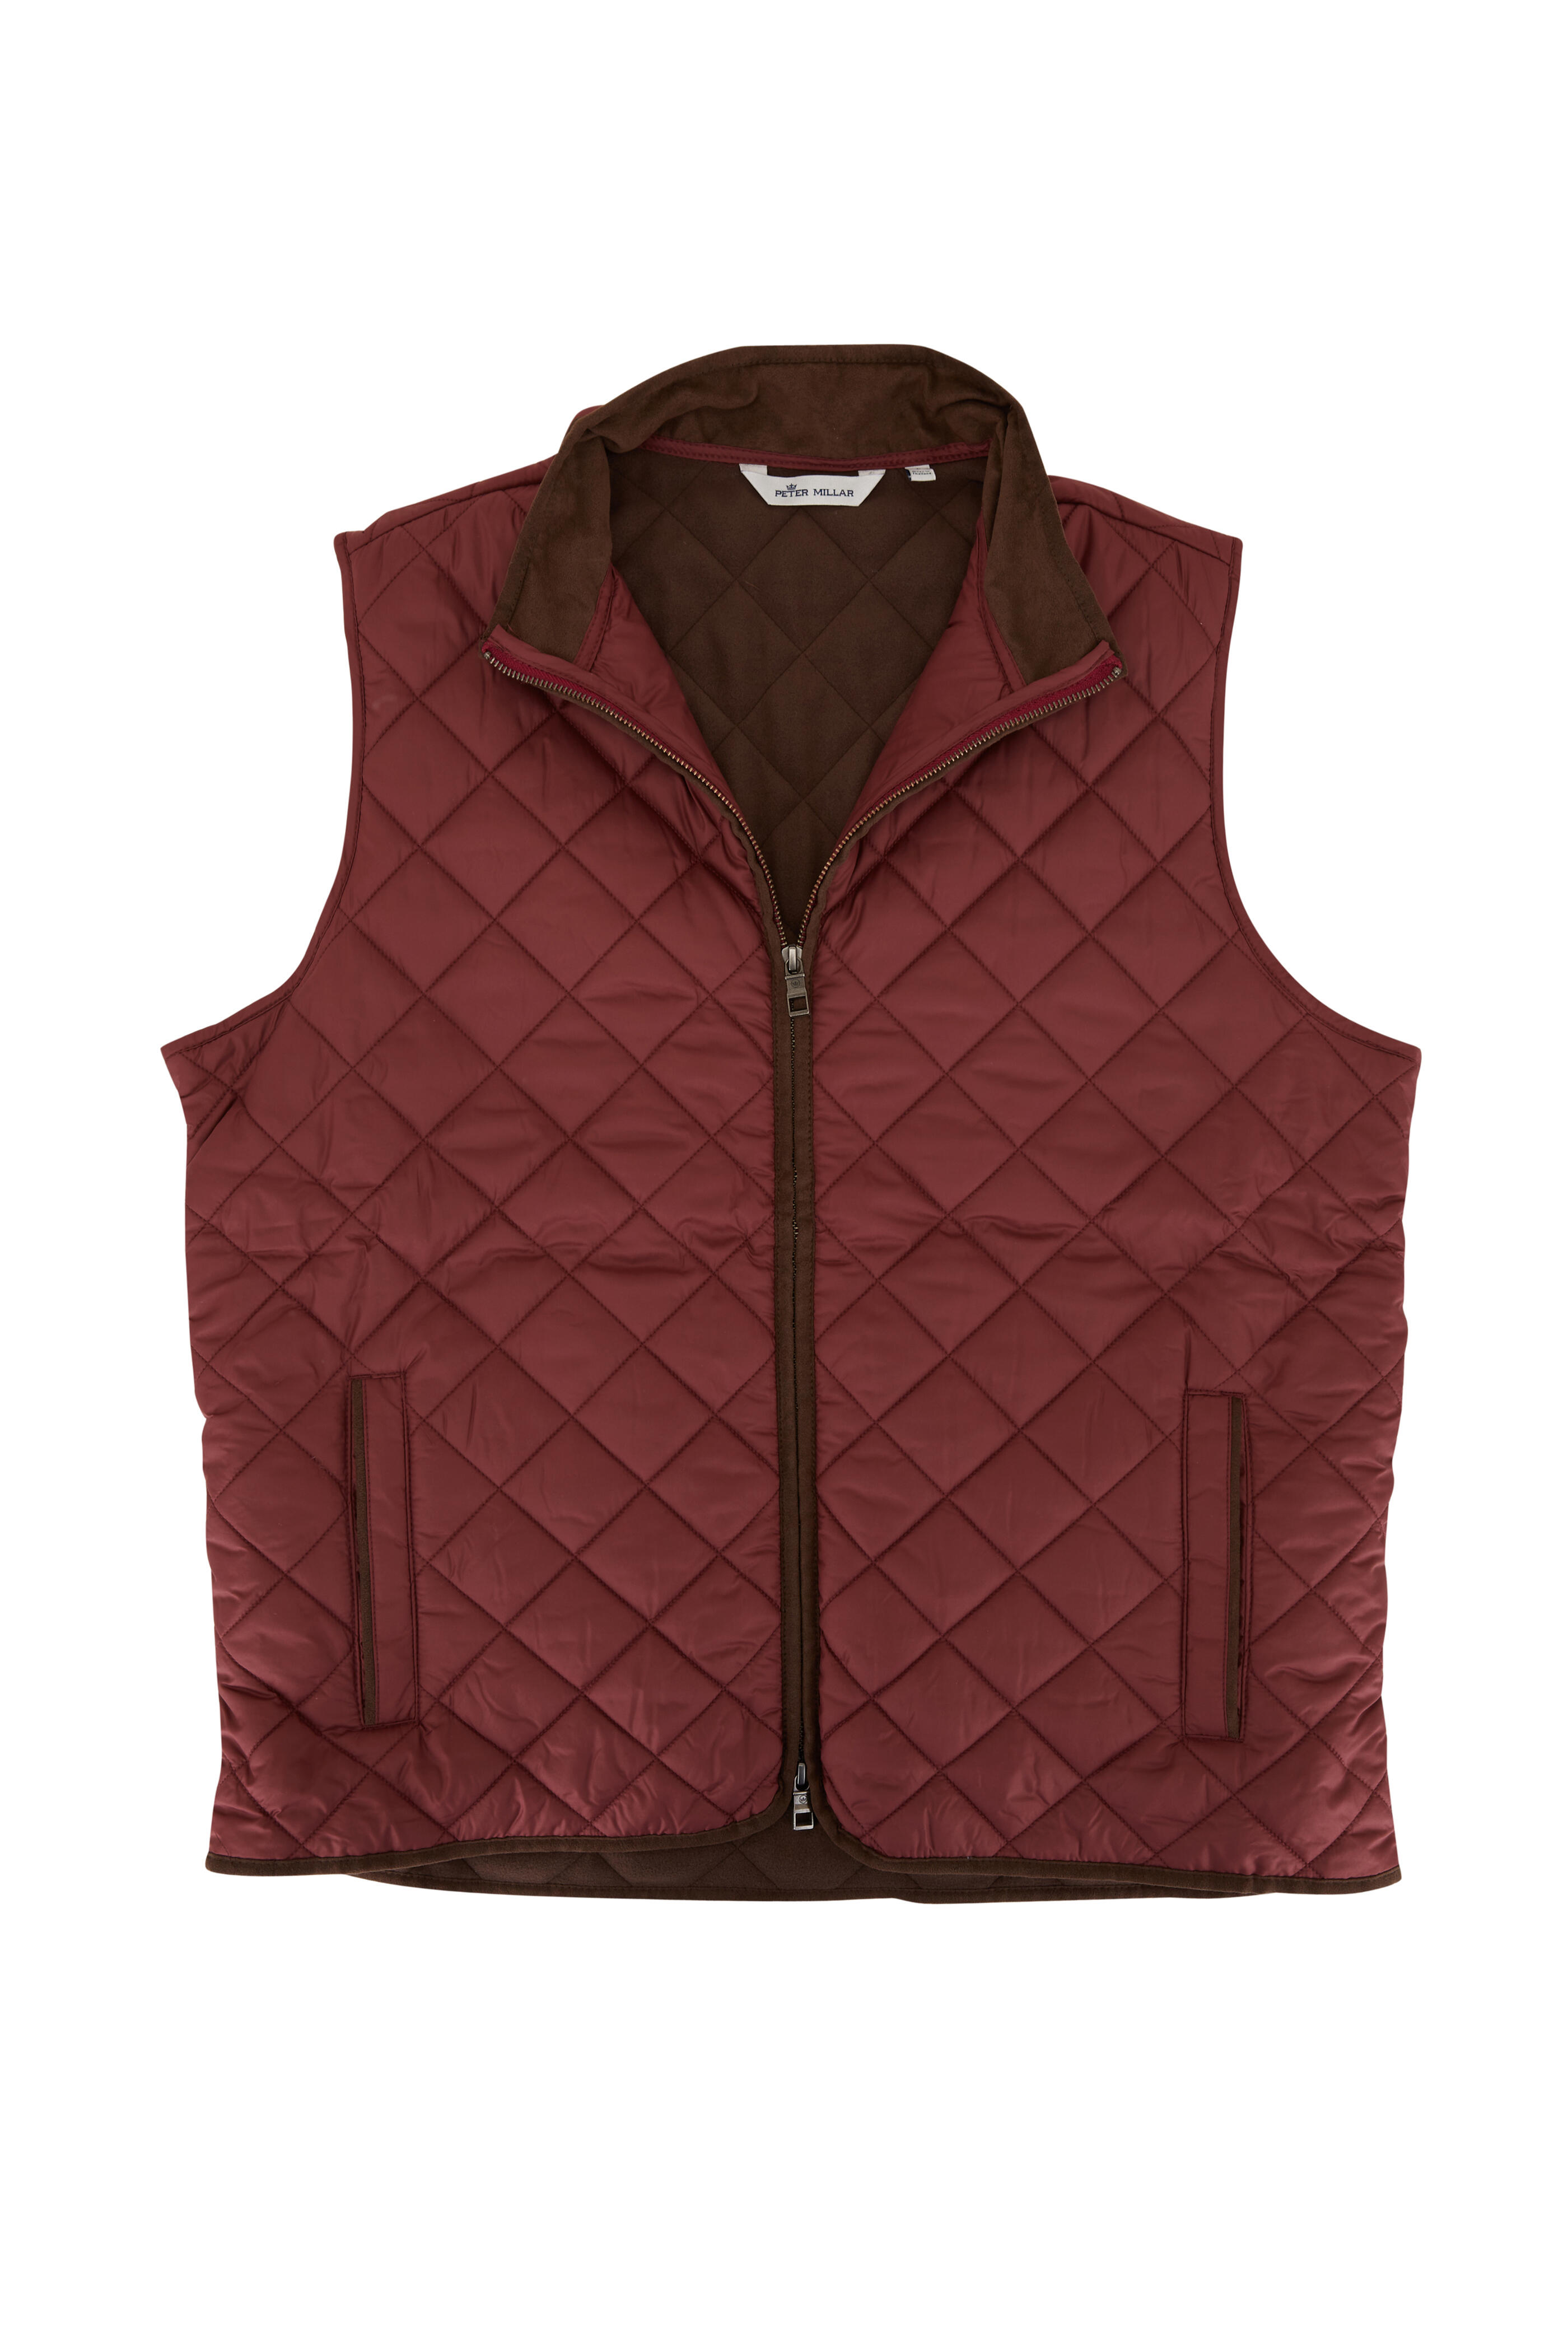 Peter Millar Essex Quilted Wool Travel Vest: Claret